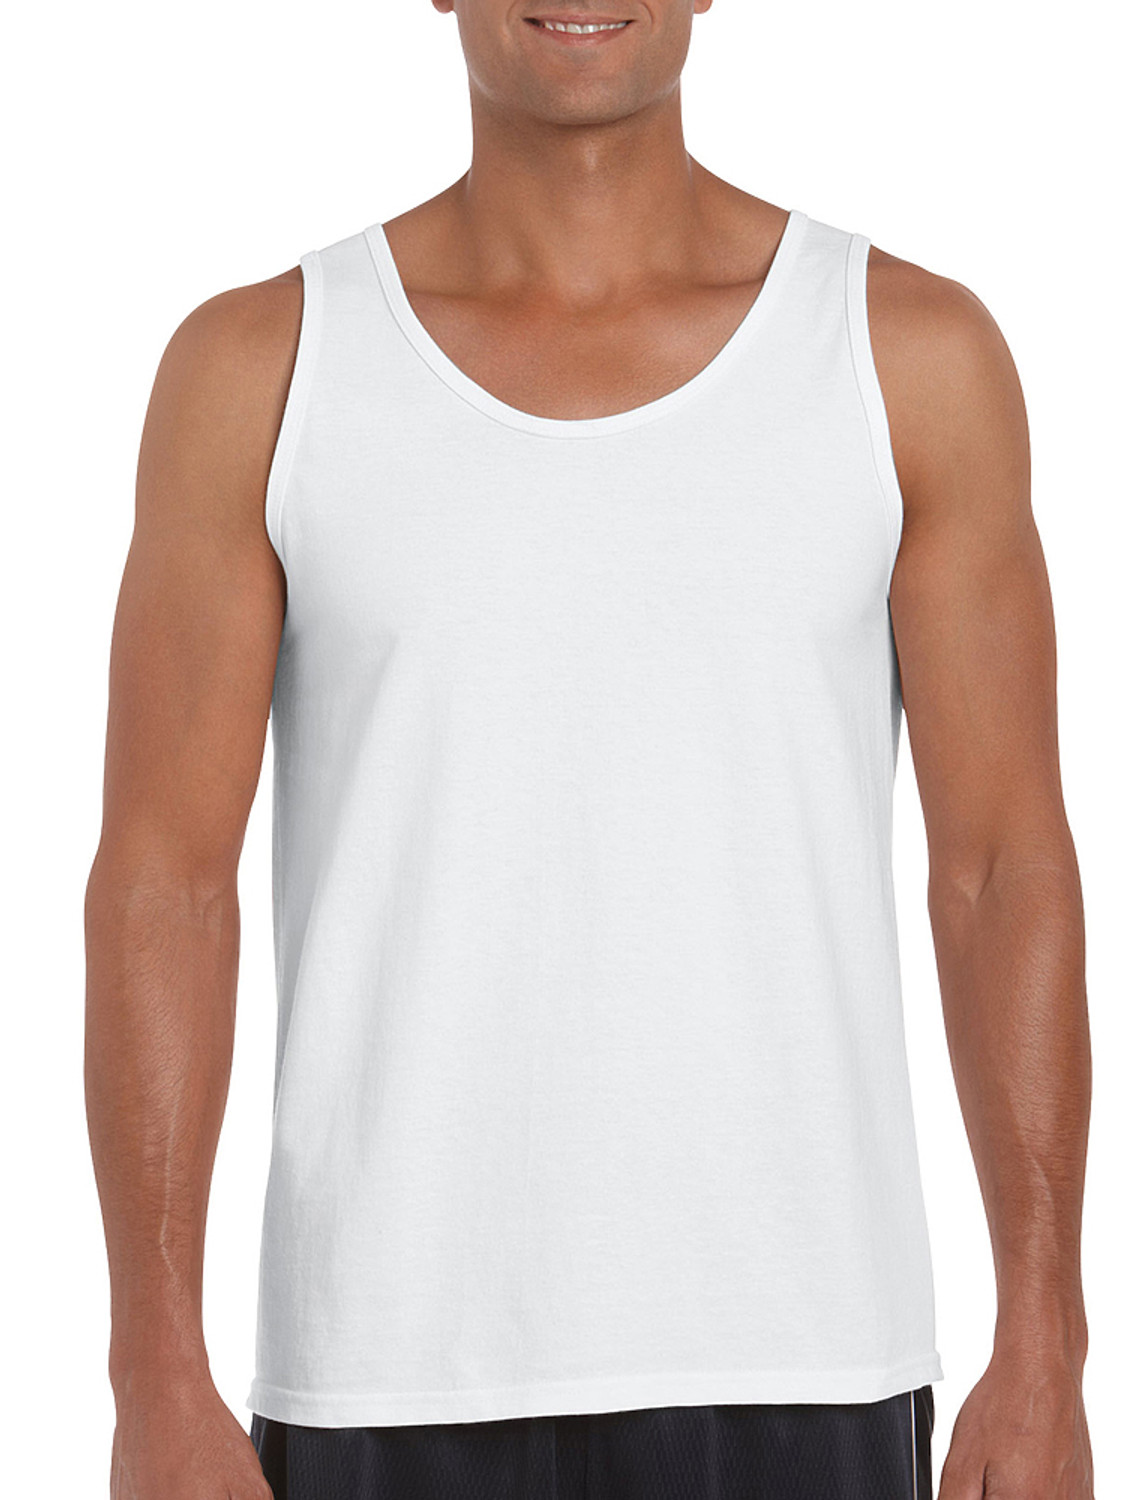 Mens THIN OM 100% Cotton Yoga Tank Top Shirt, 2XL White